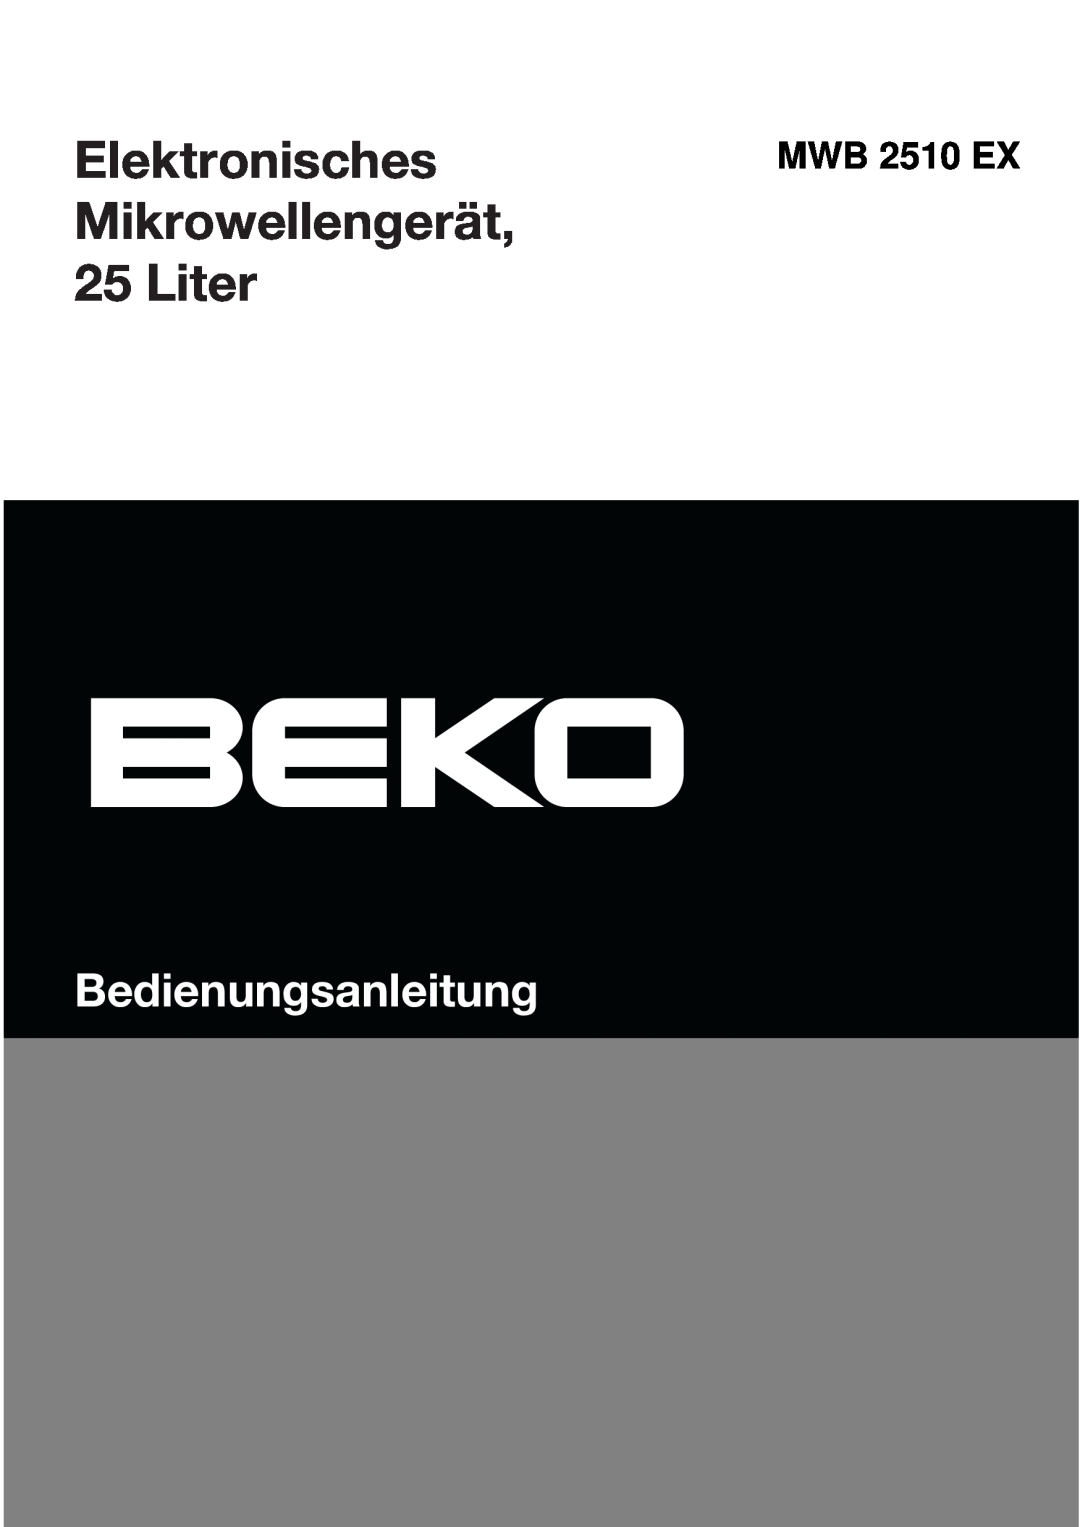 Beko MWB 2510 EX instruction manual Elektronisches Mikrowellengerät 25 Liter, Bedienungsanleitung 